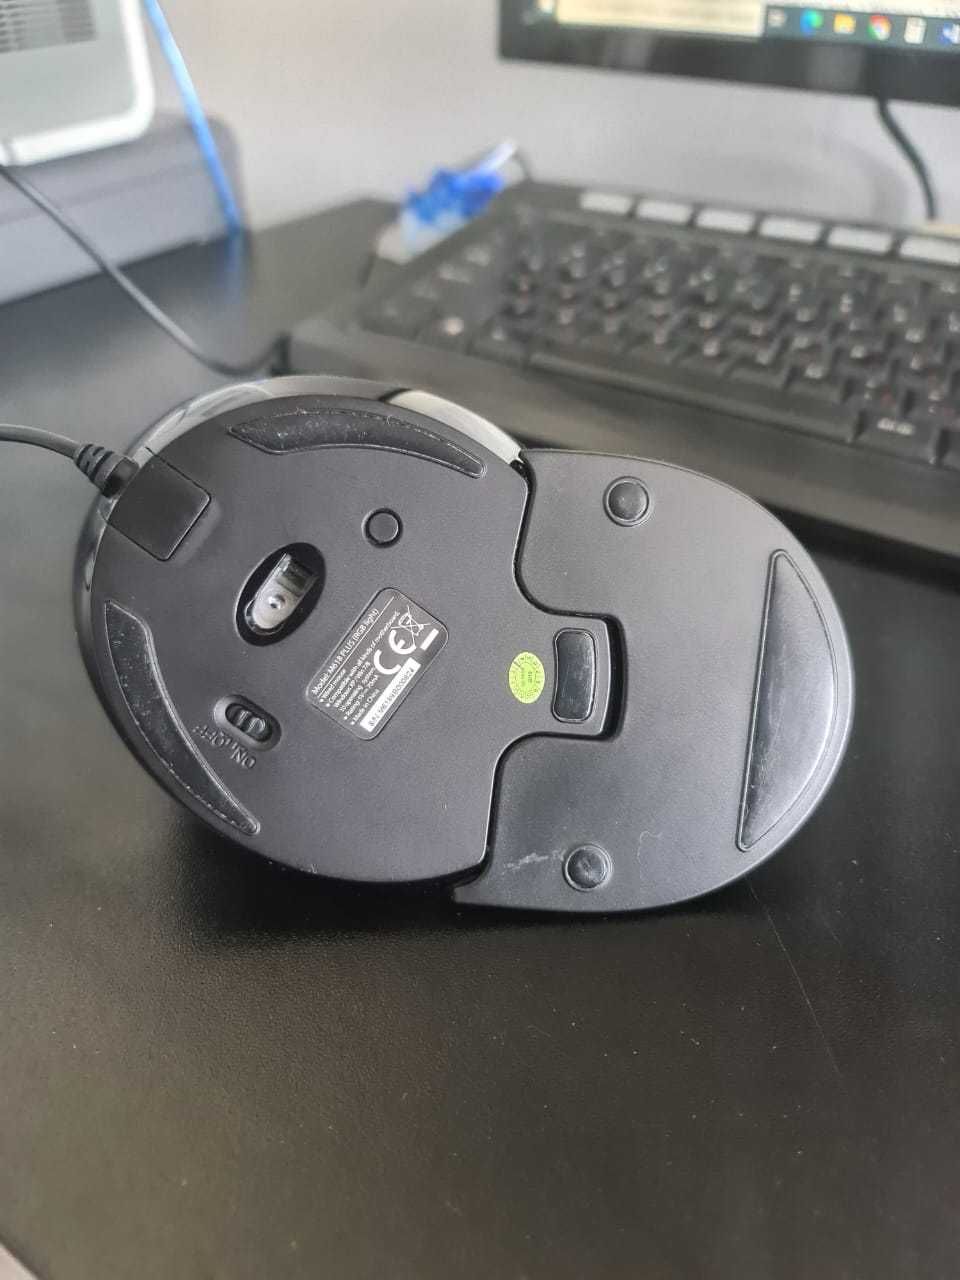 Мышь Delux M618 Plus (RGB), Black, USB